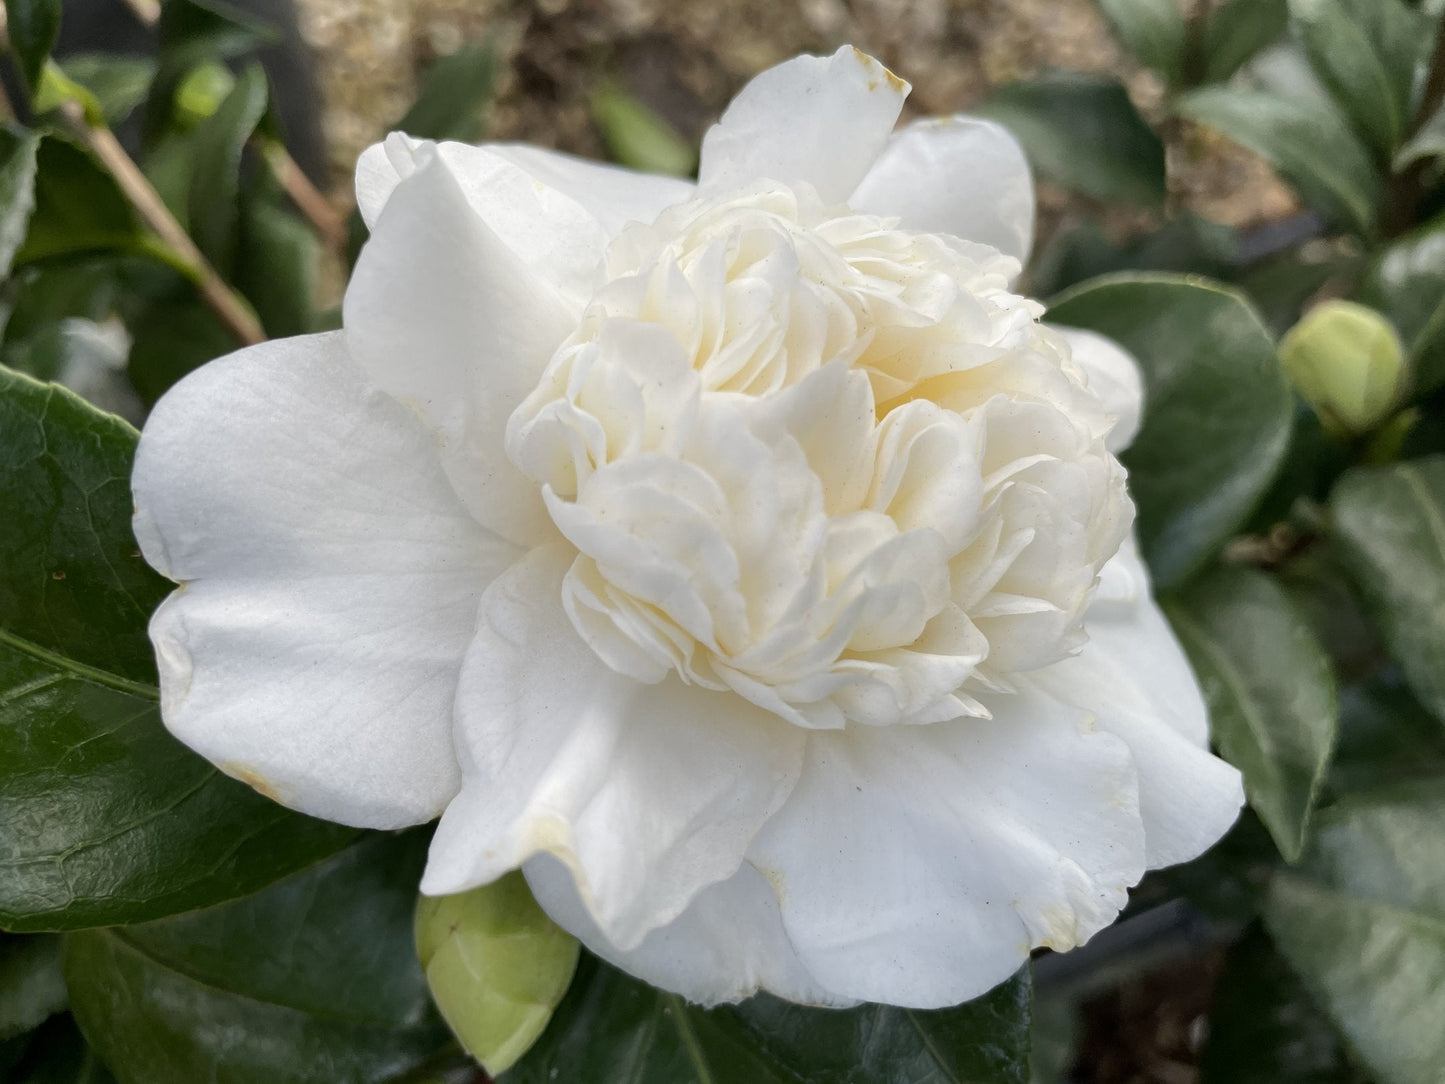 Camellia japonica 'Snowball' multistem